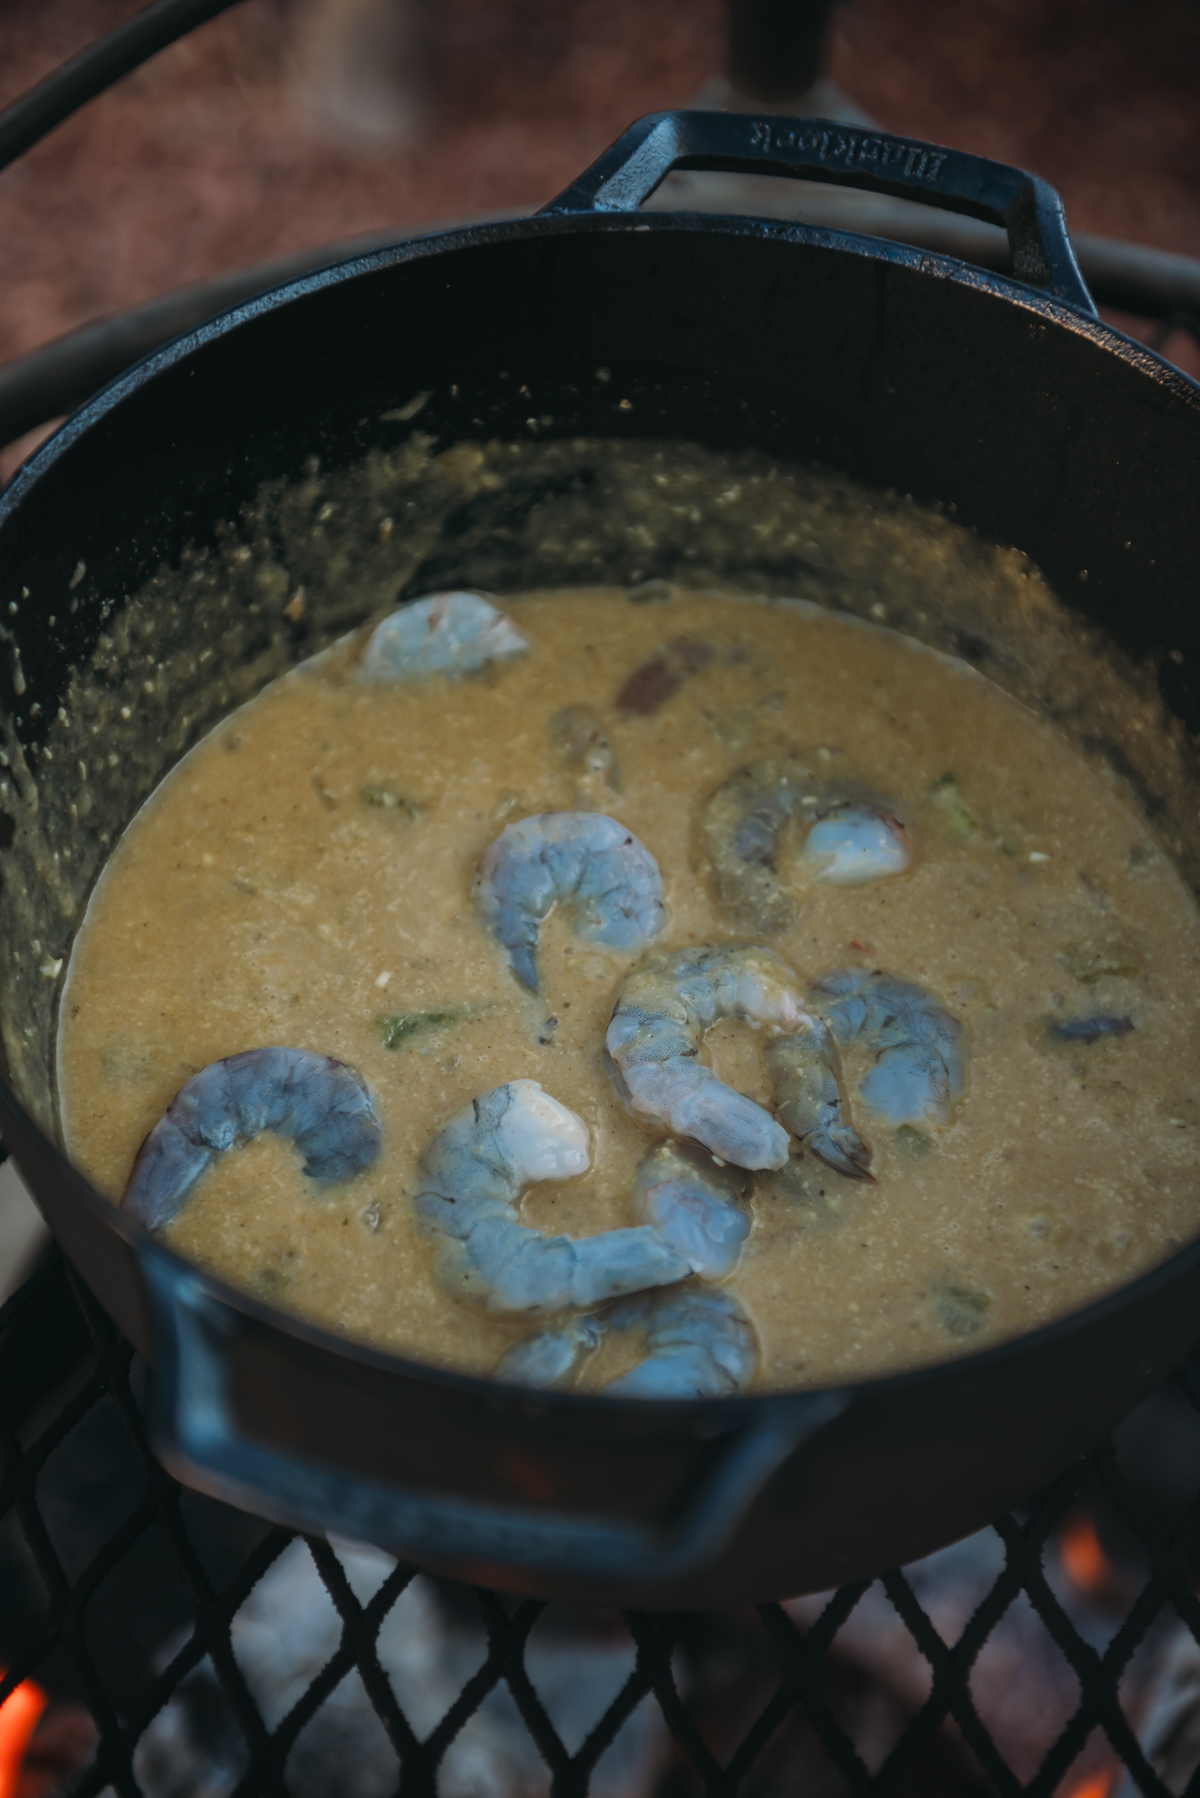 raw jumbo shrimp just added to korma curry sauce